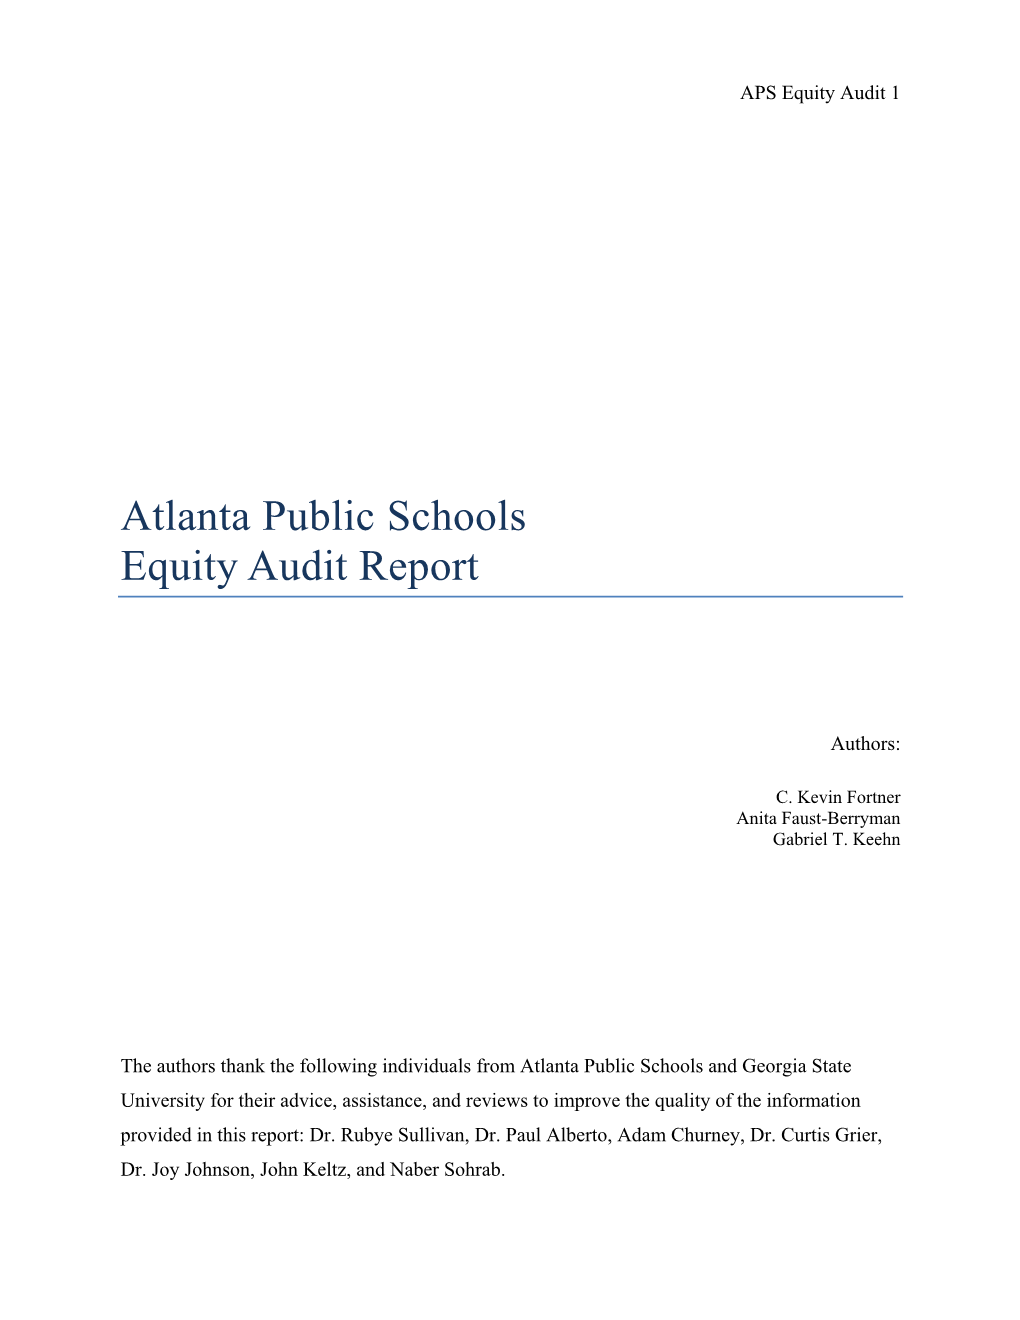 Atlanta Public Schools Equity Audit Report